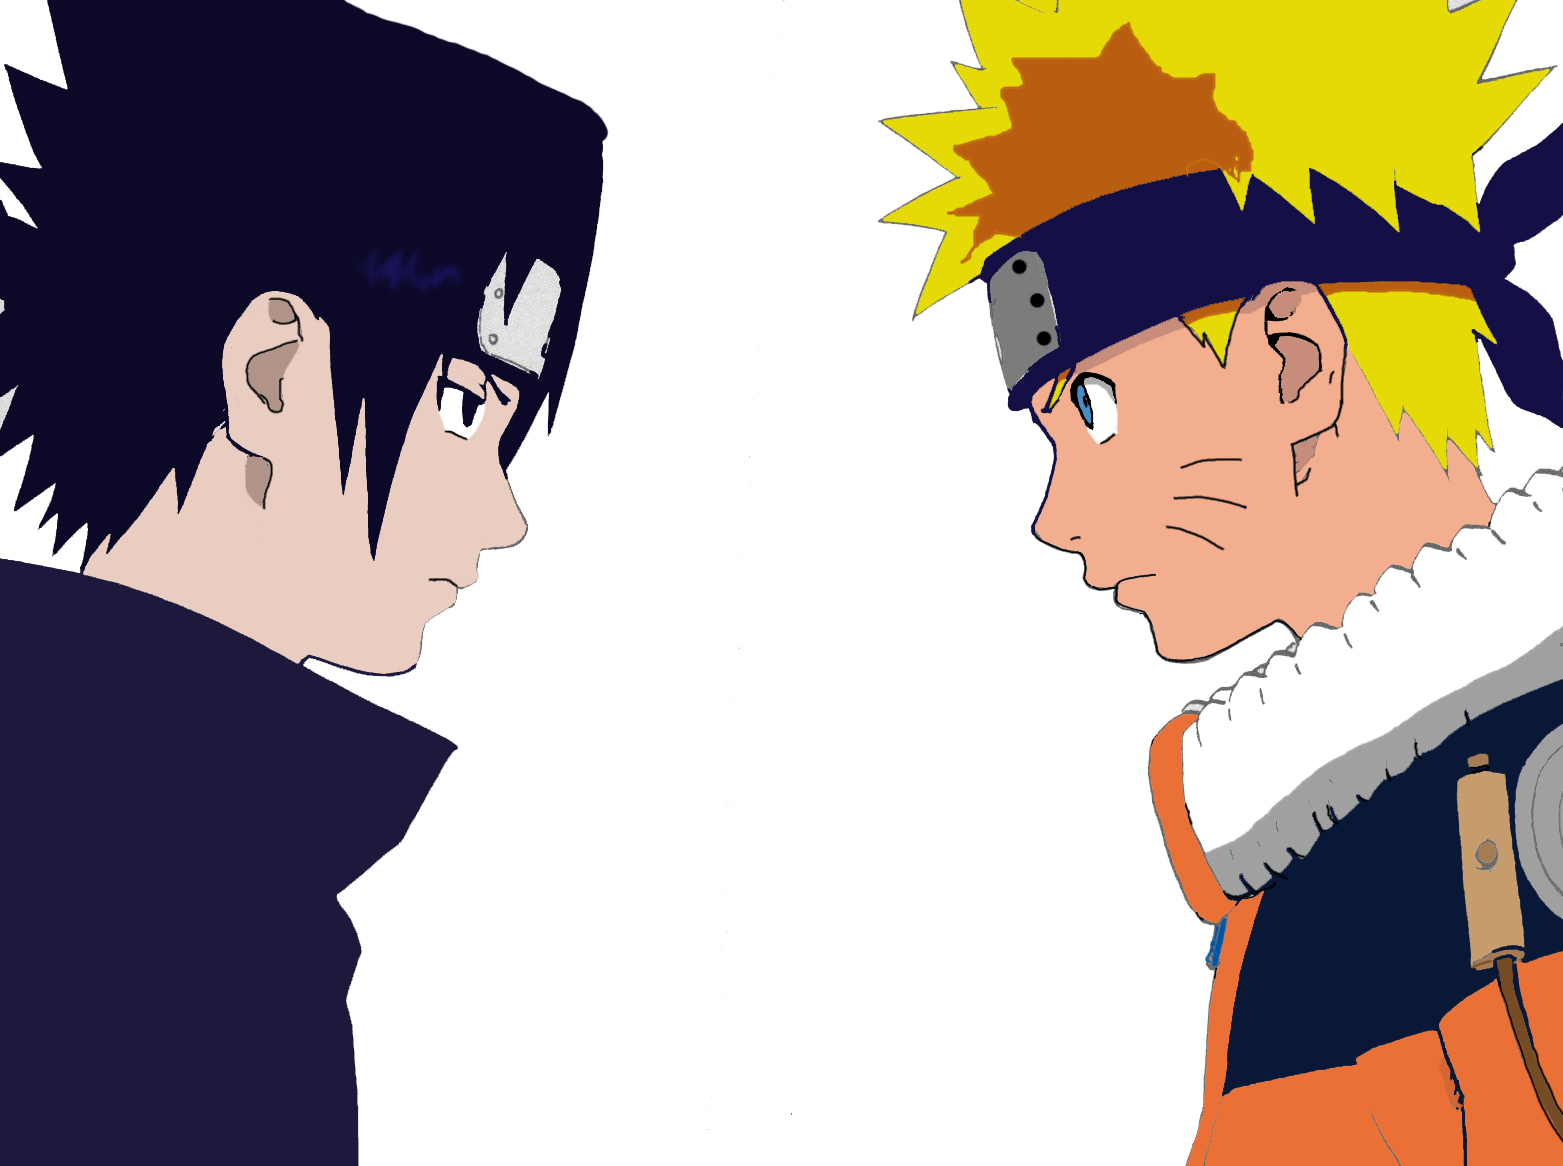 Naruto vs. Sasuke by Kebee14